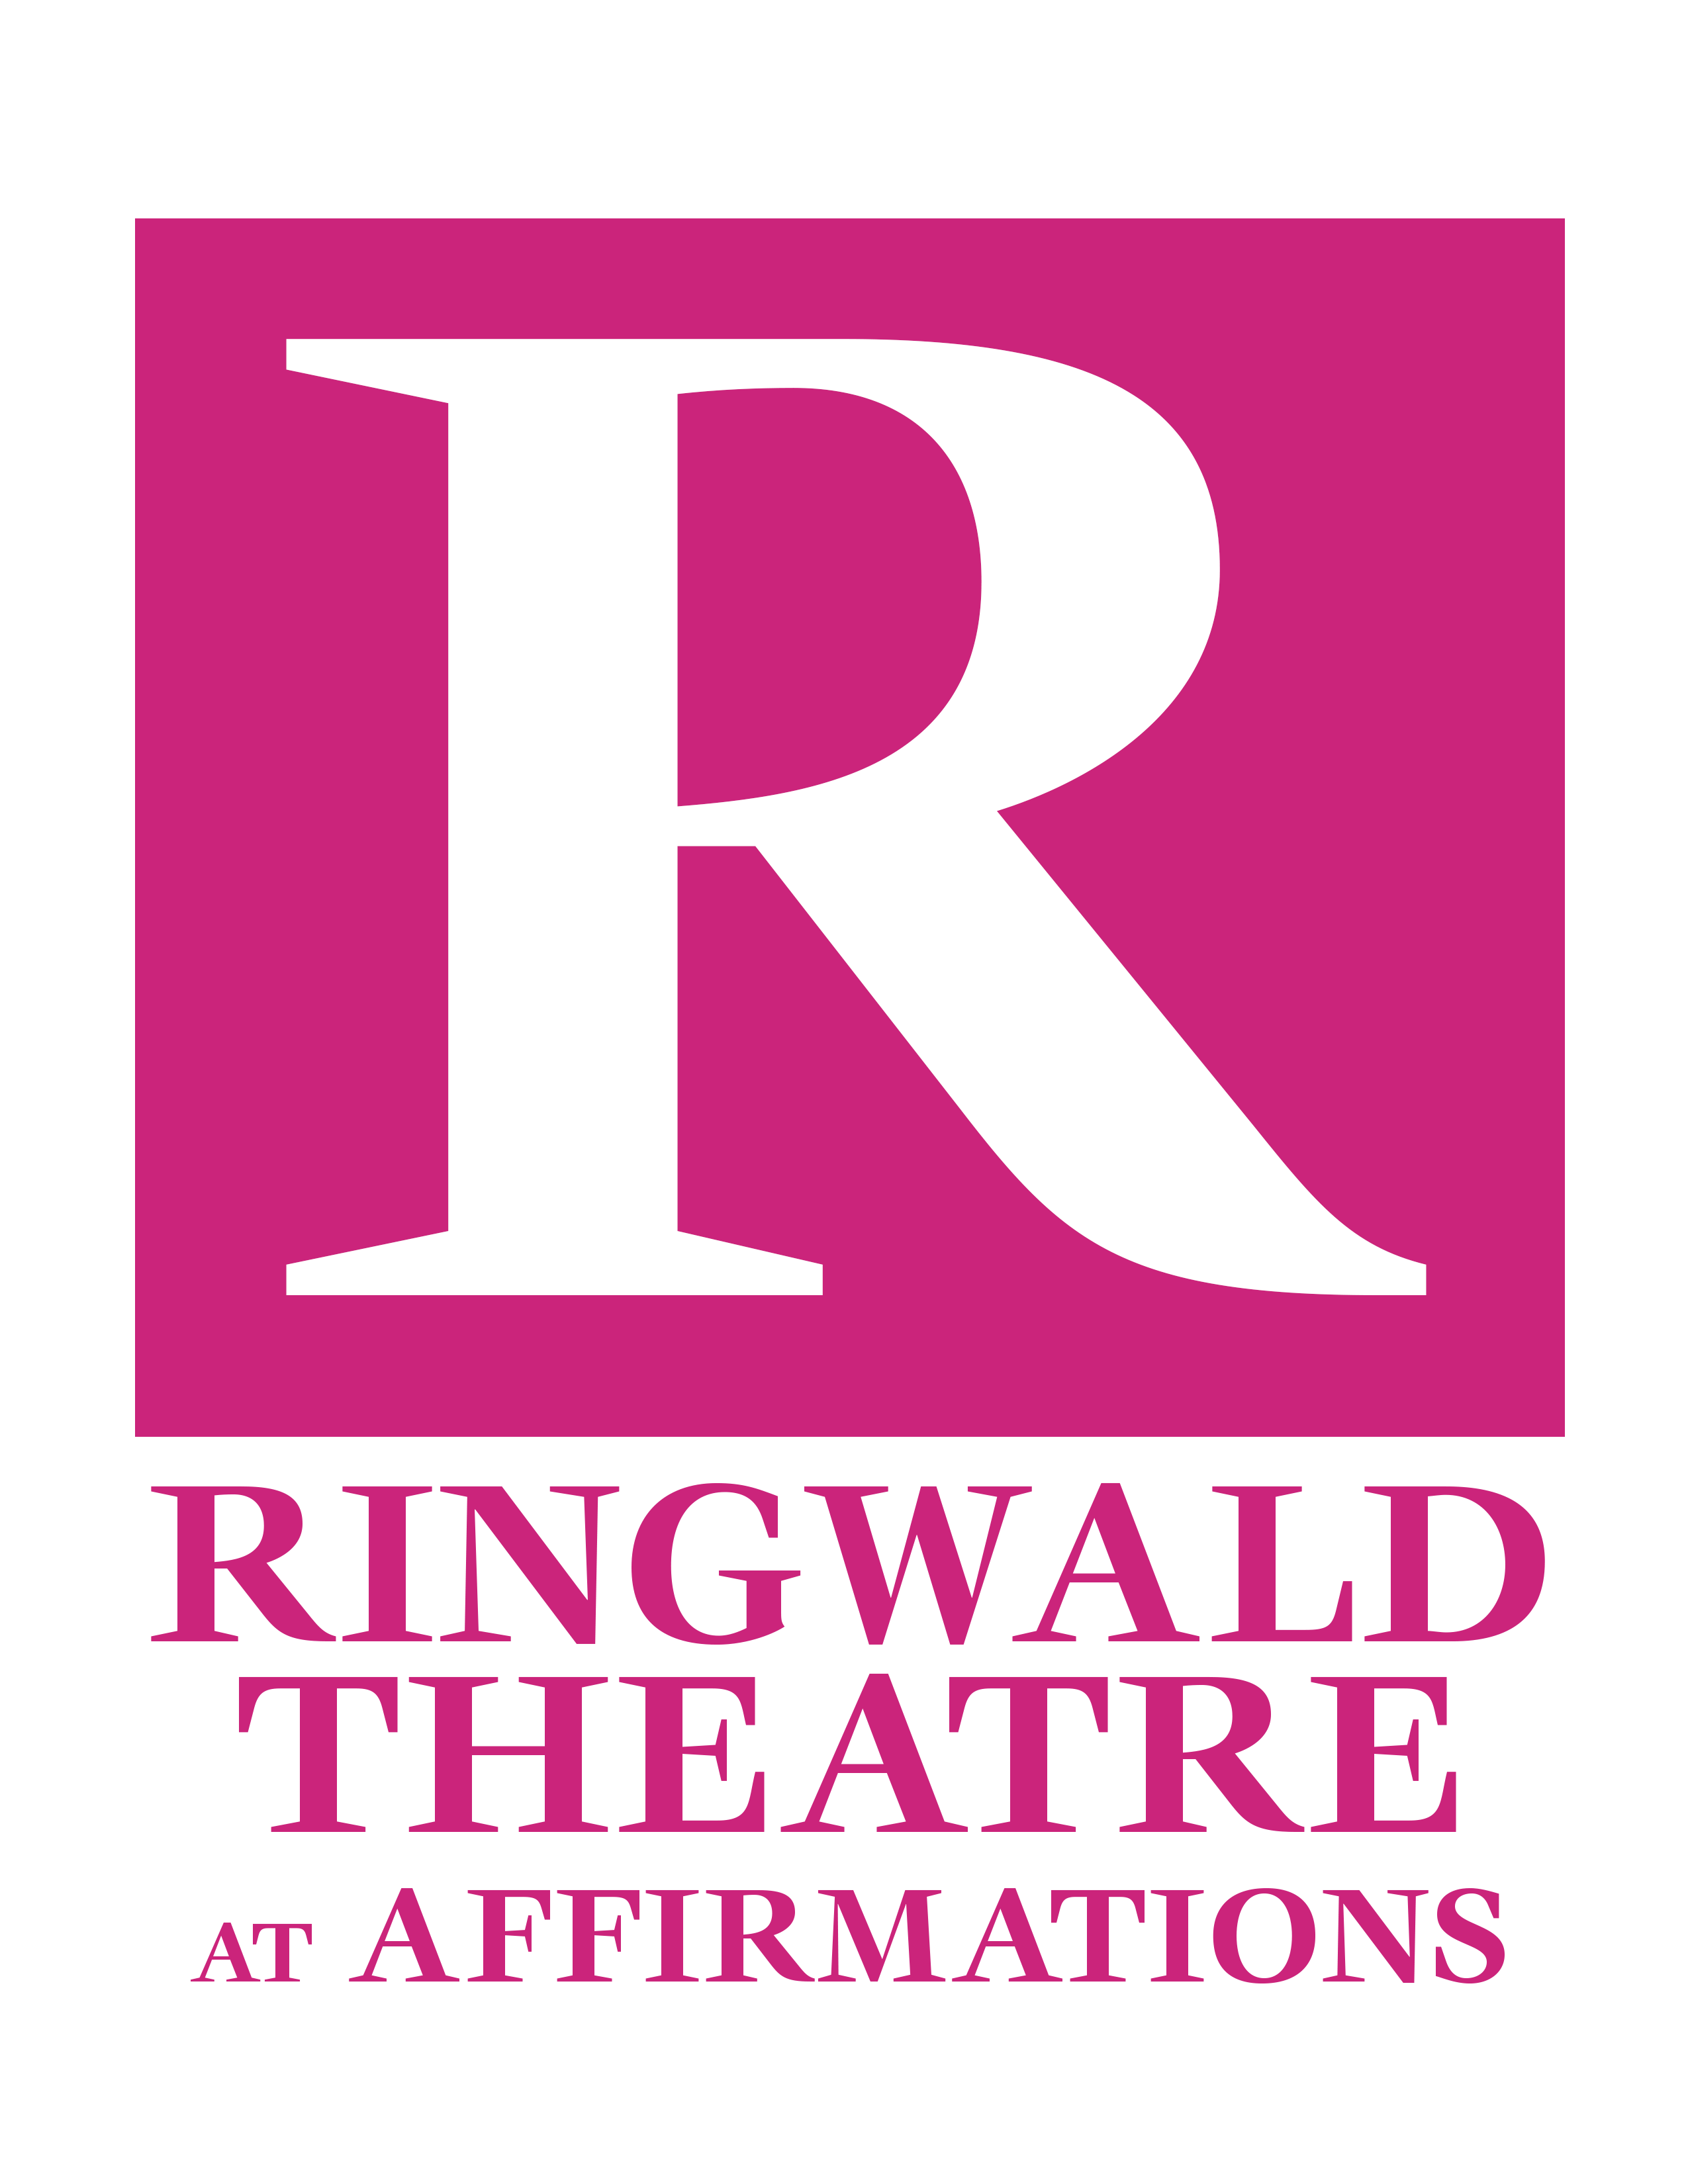 The Ringwald Theatre